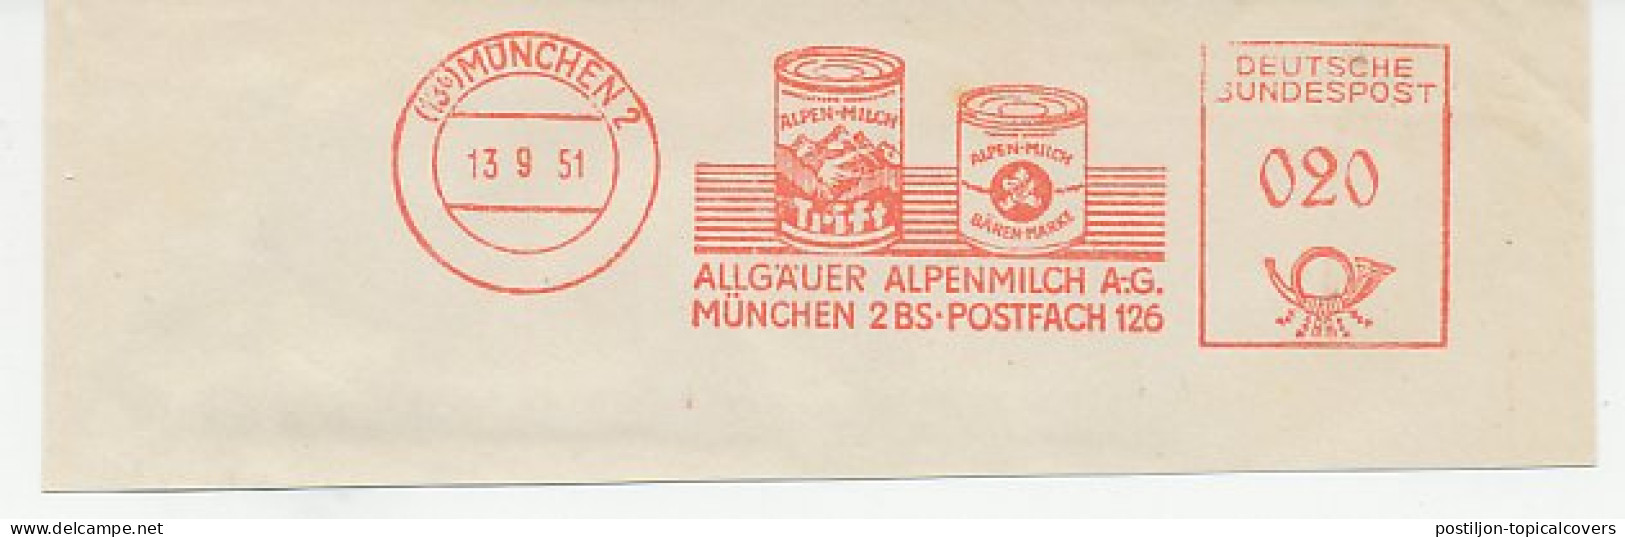 Meter Cut Germany 1951 Alpine Milk - Levensmiddelen